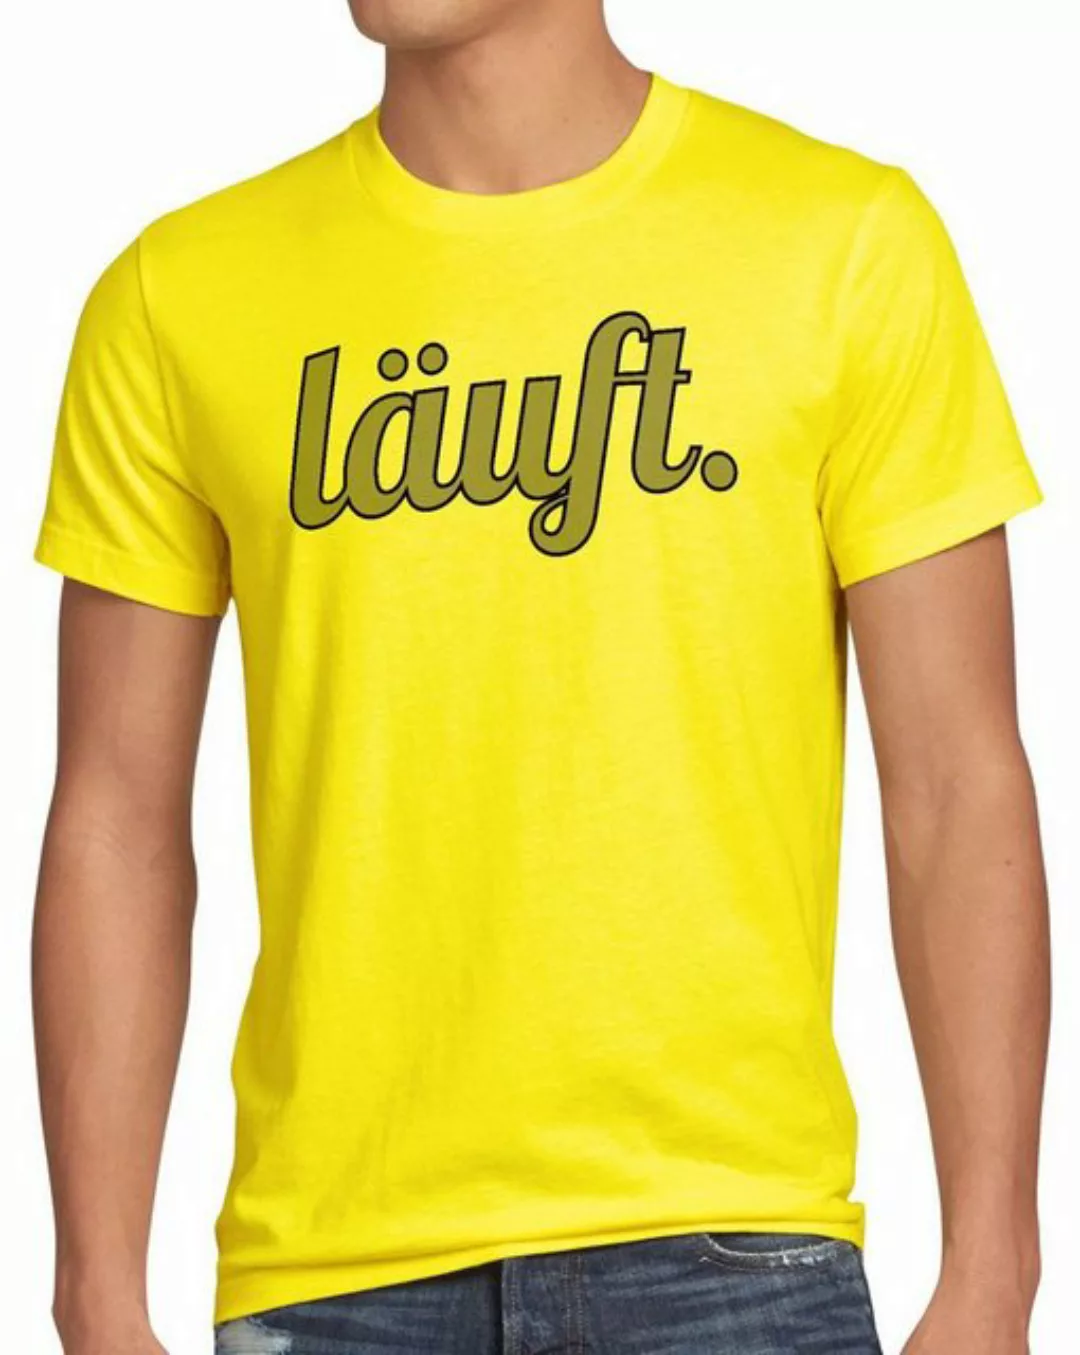 style3 Print-Shirt Herren T-Shirt läuft Funshirt Spruchshirt Shirt Fun bei günstig online kaufen